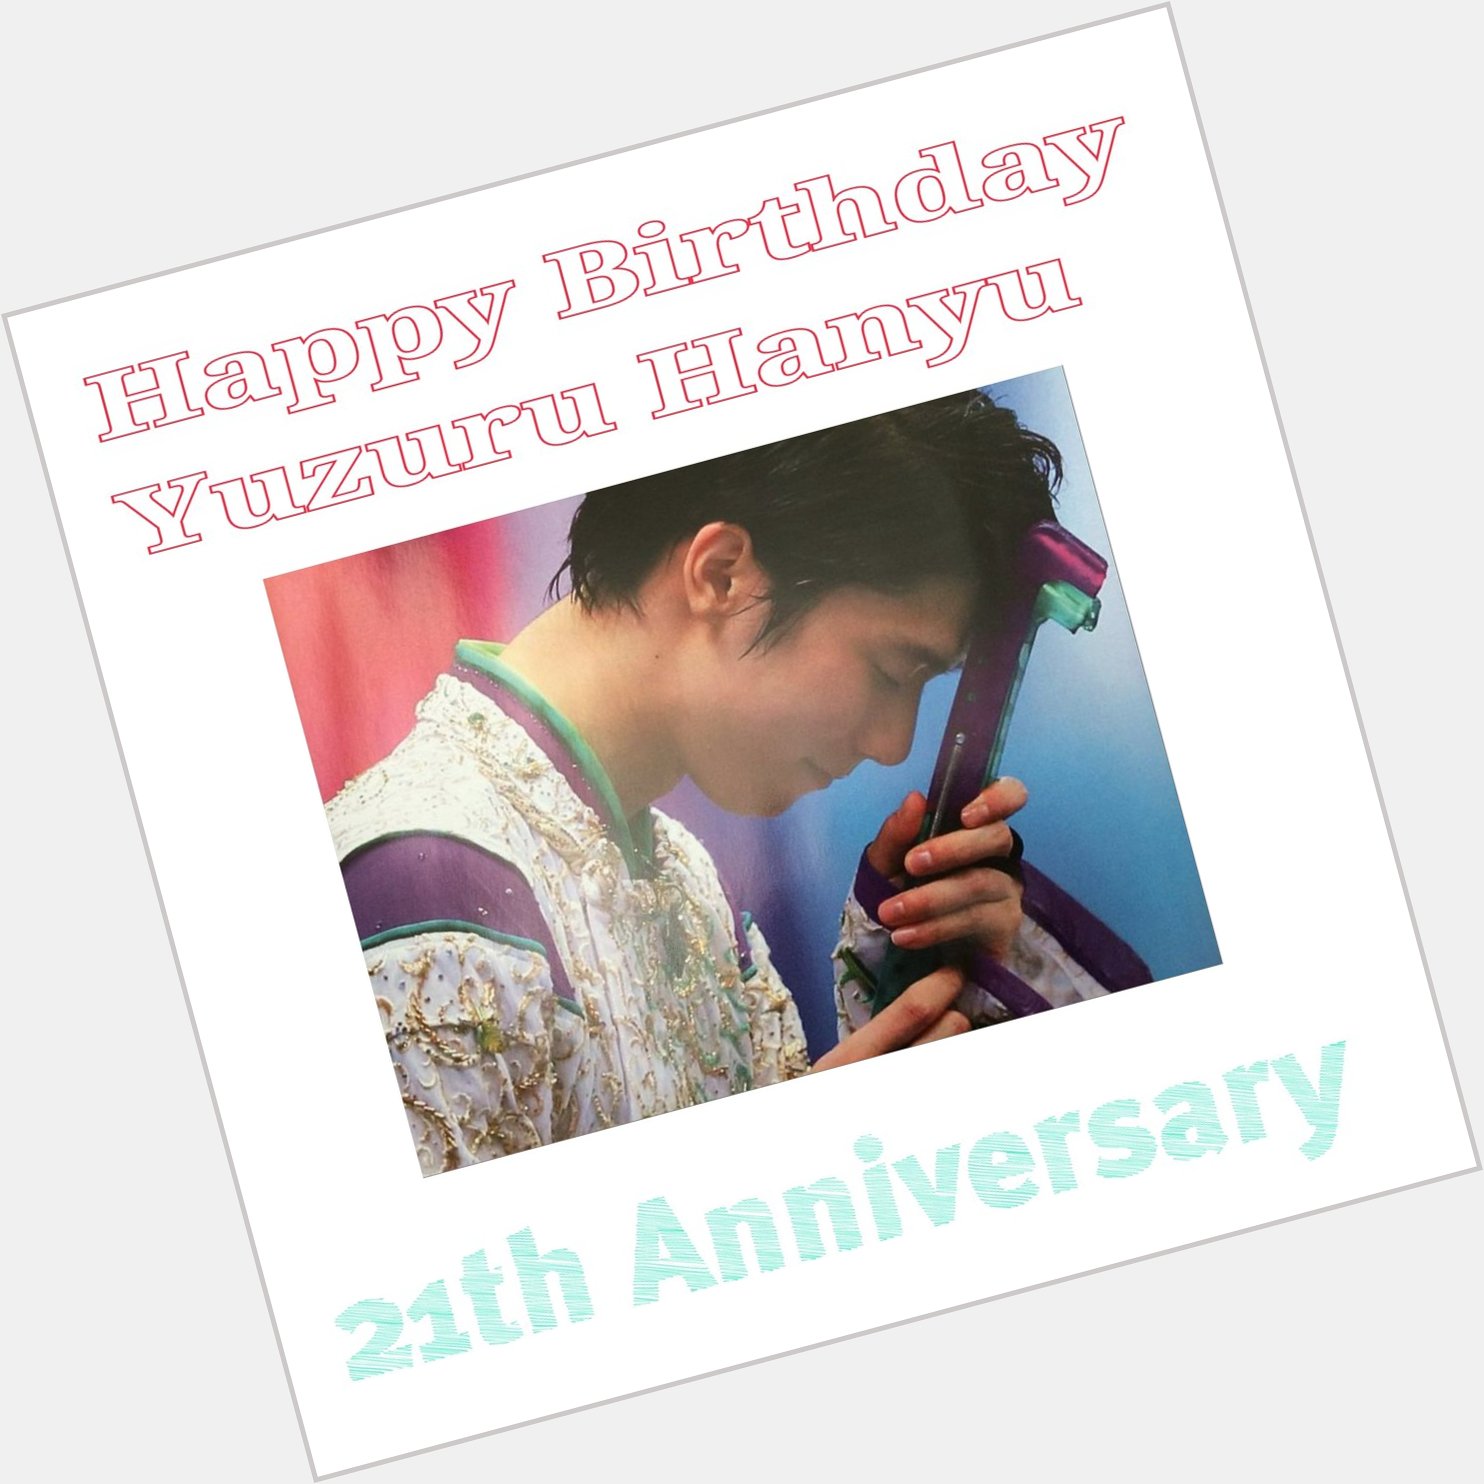  Happy Birthday Yuzuru Hanyu 21                                                      1 1         